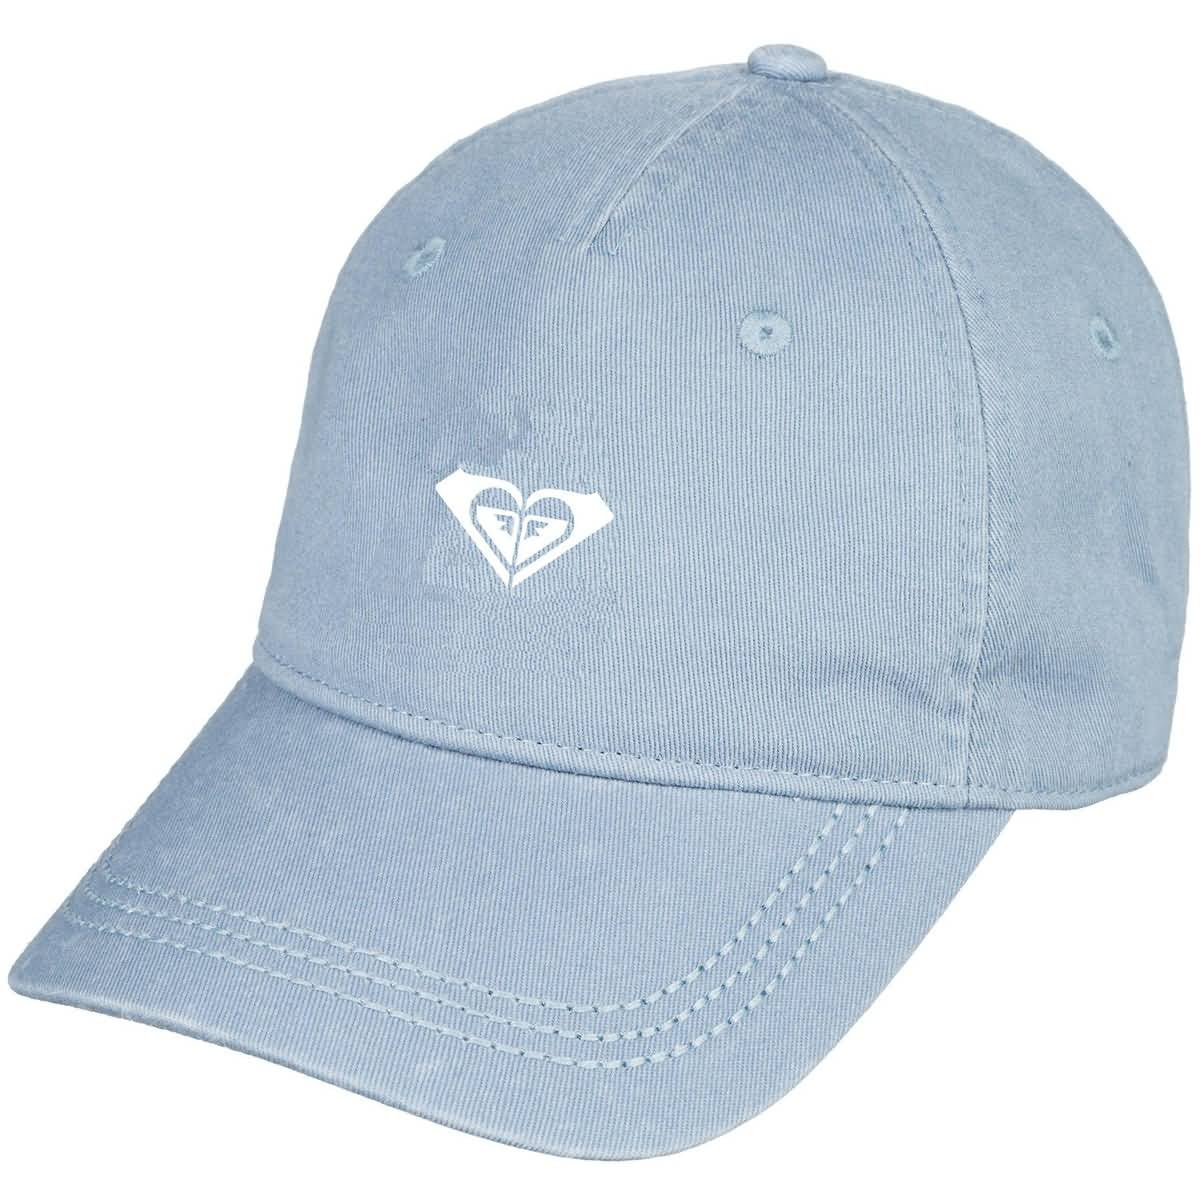 New Roxy Dear Believer Anchor Adjustable Womens Cap Hat 